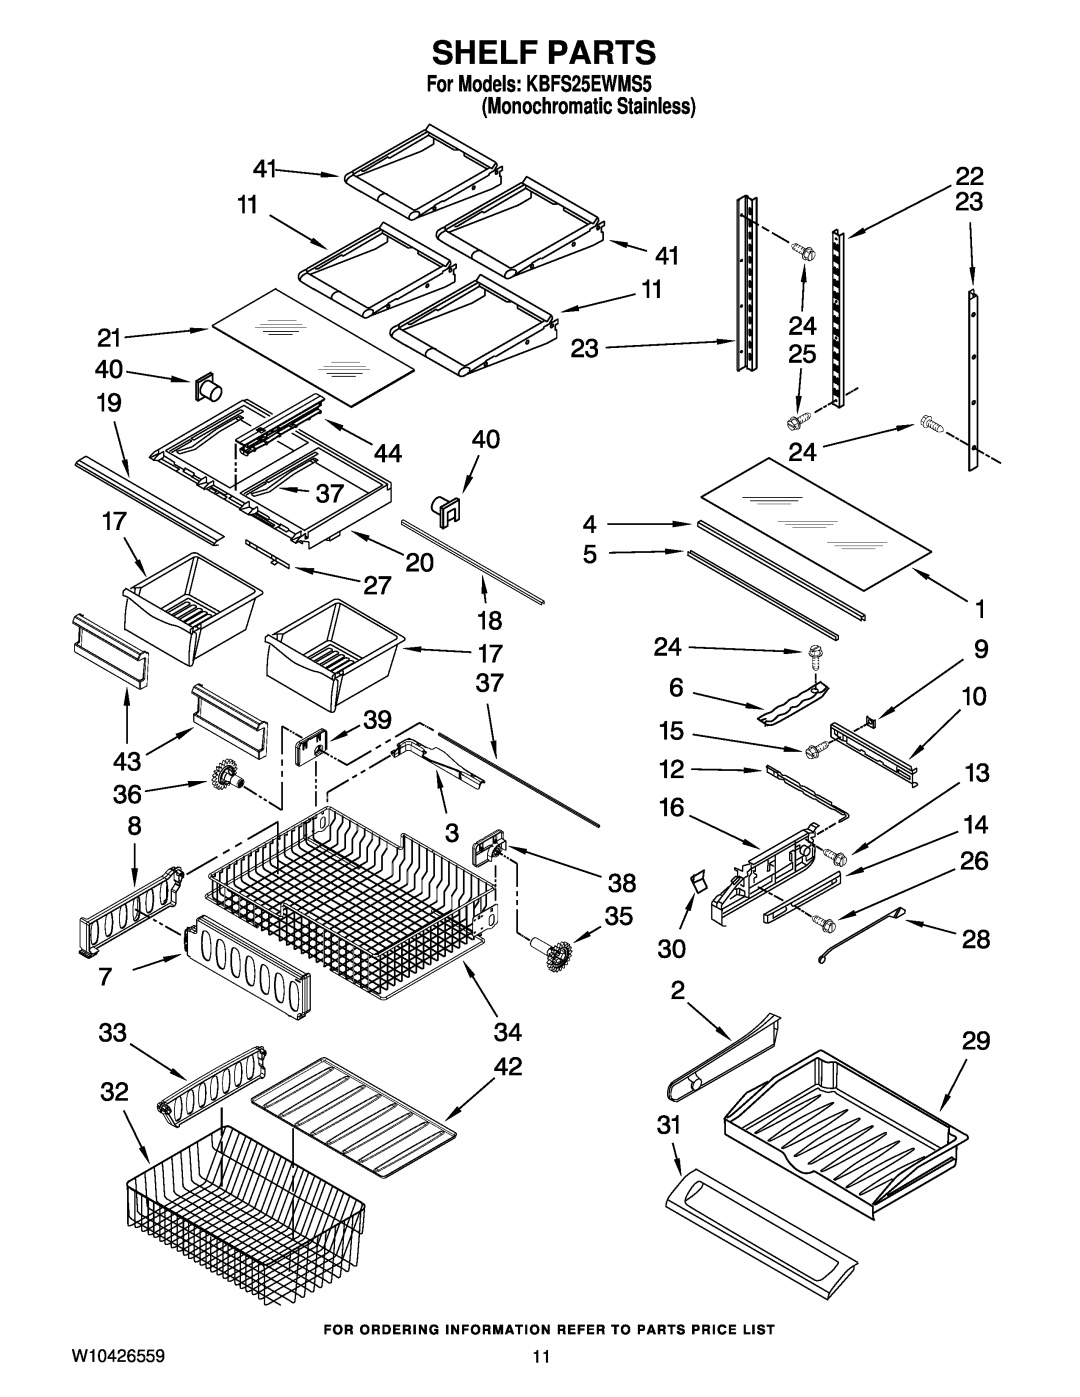 KitchenAid manual Shelf Parts, For Models KBFS25EWMS5 Monochromatic Stainless 